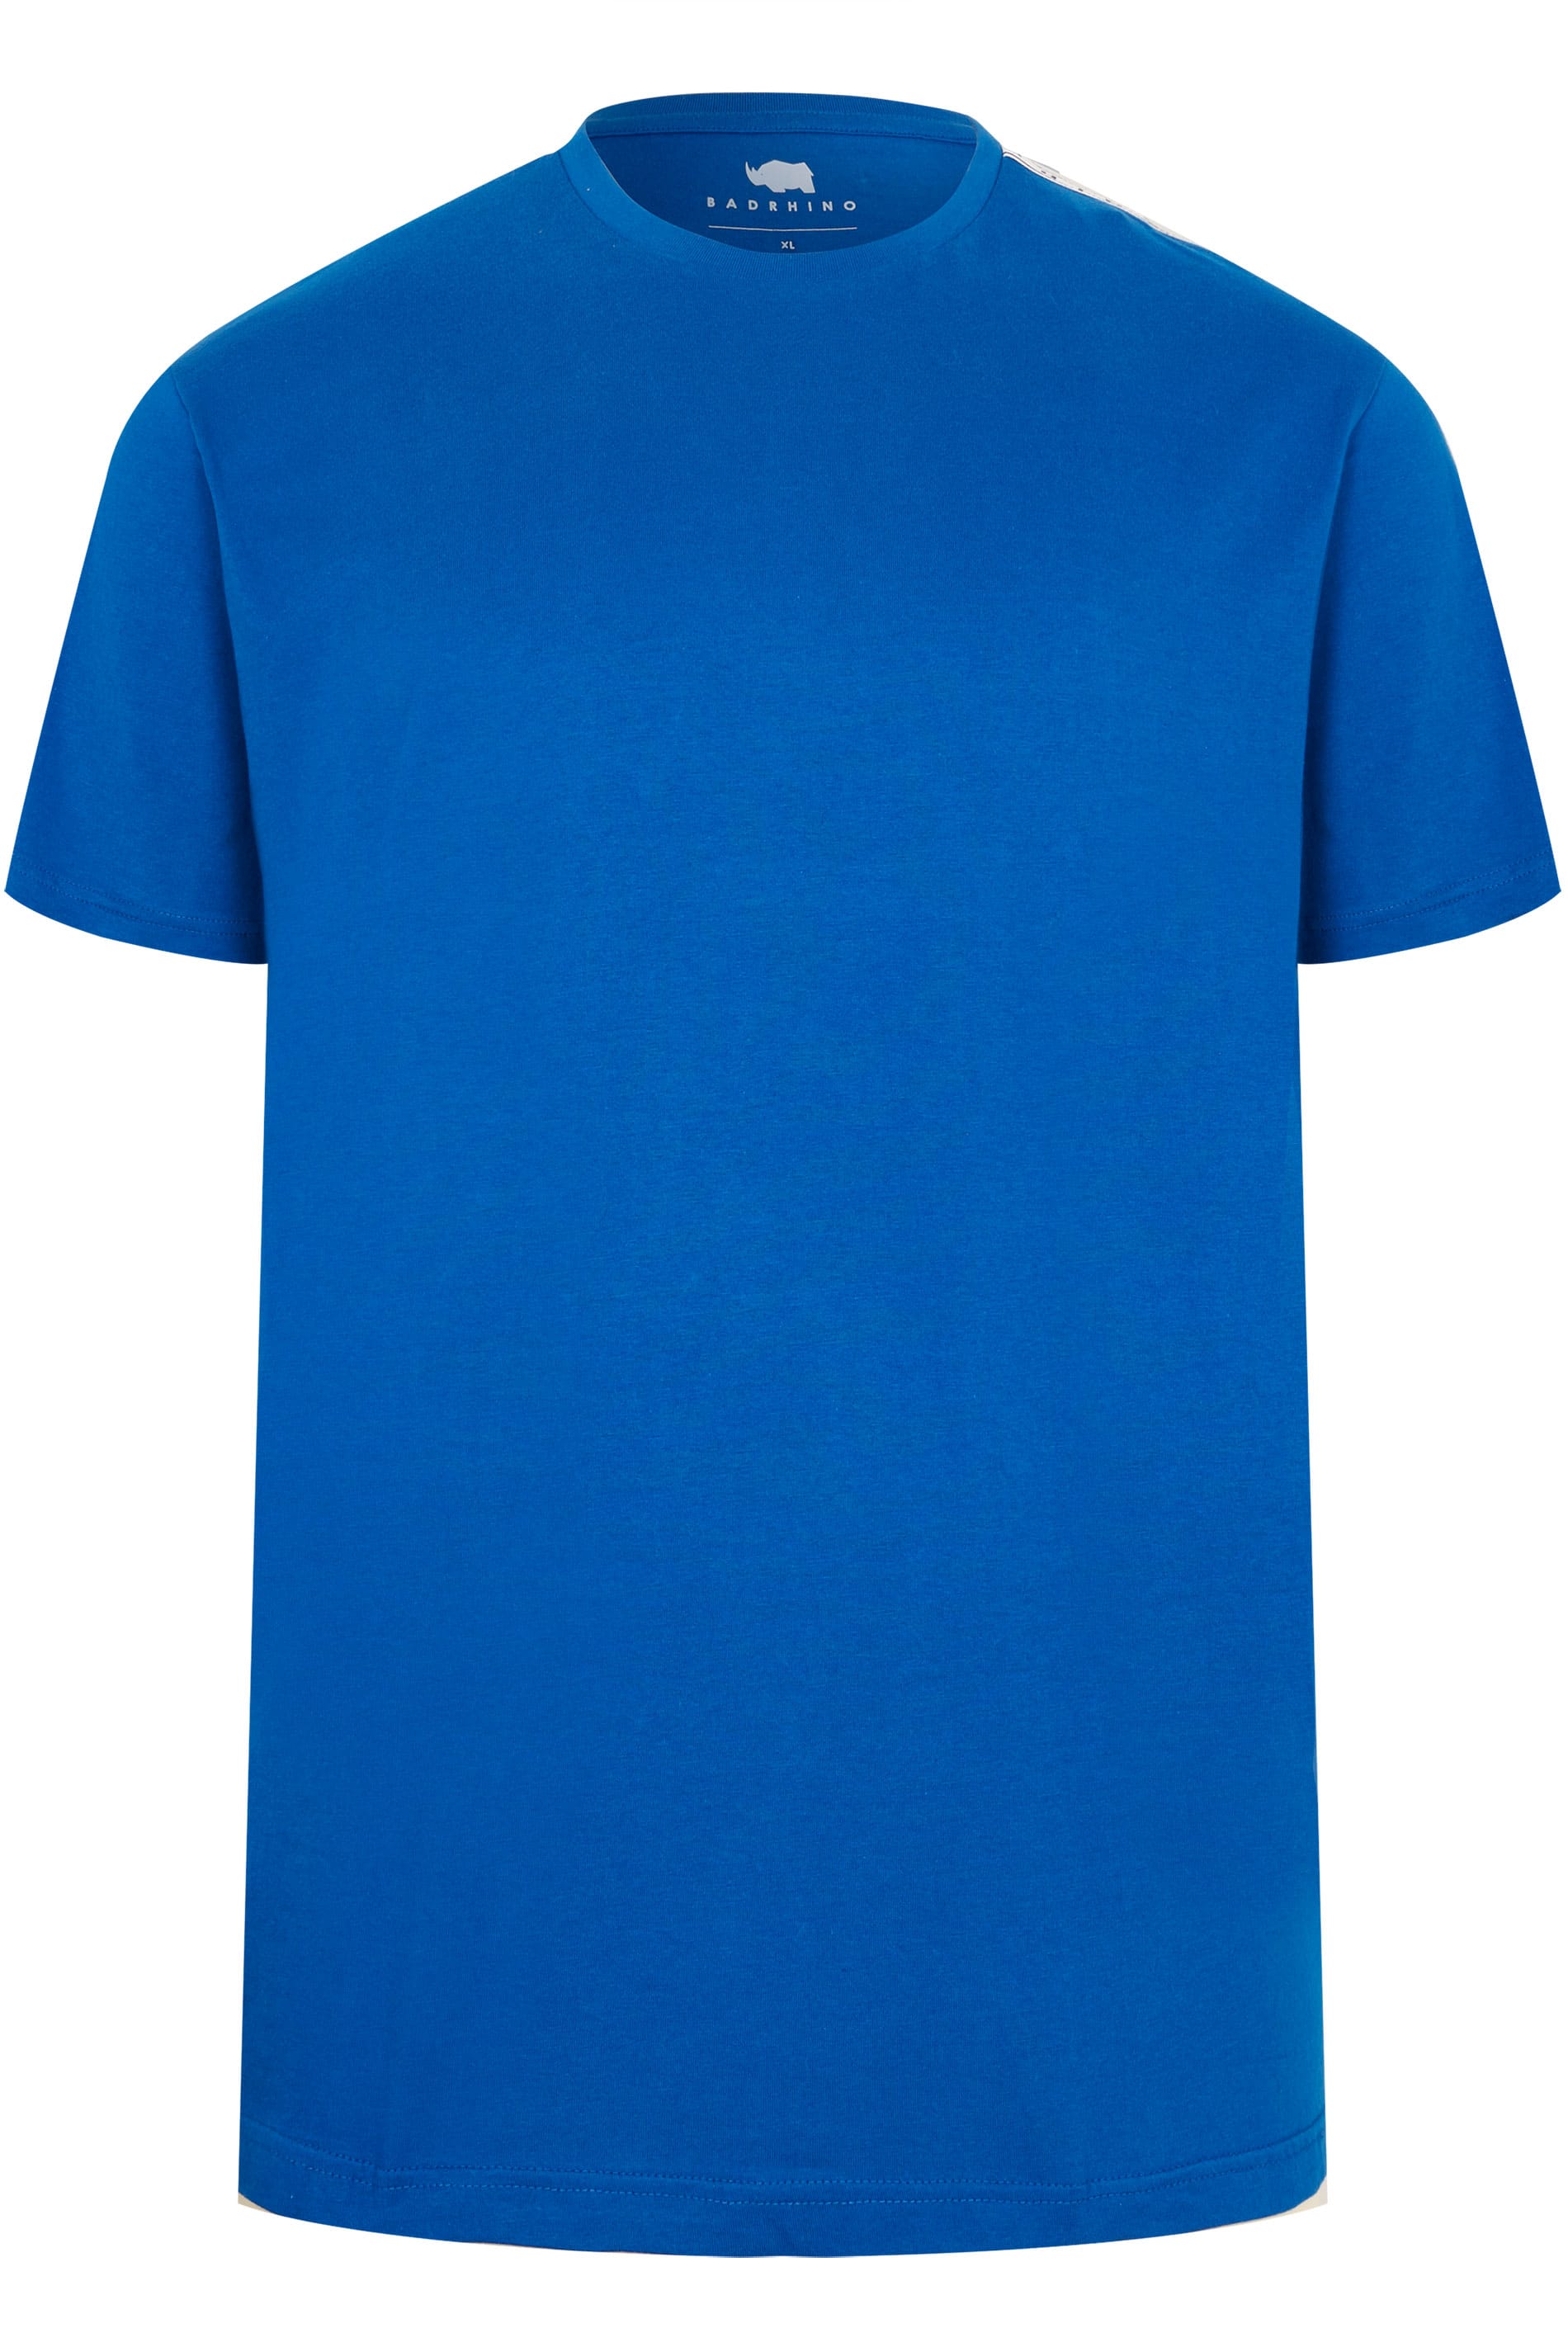 BadRhino Cobalt Blue Taped T-Shirt | Sizes M to 8XL | BadRhino